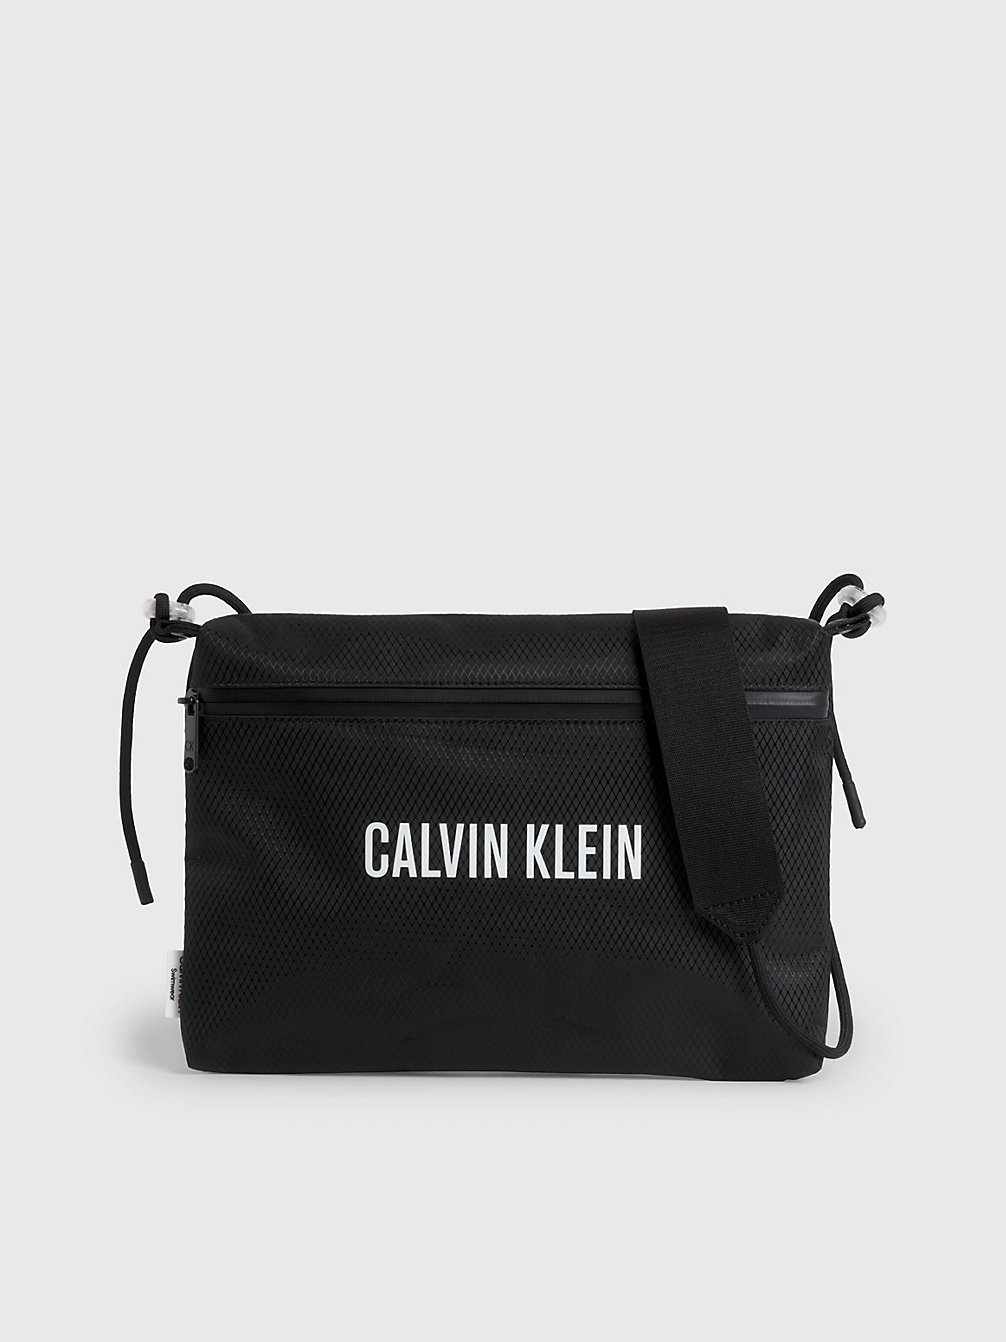 PVH BLACK Crossbody Beach Bag undefined unisex Calvin Klein